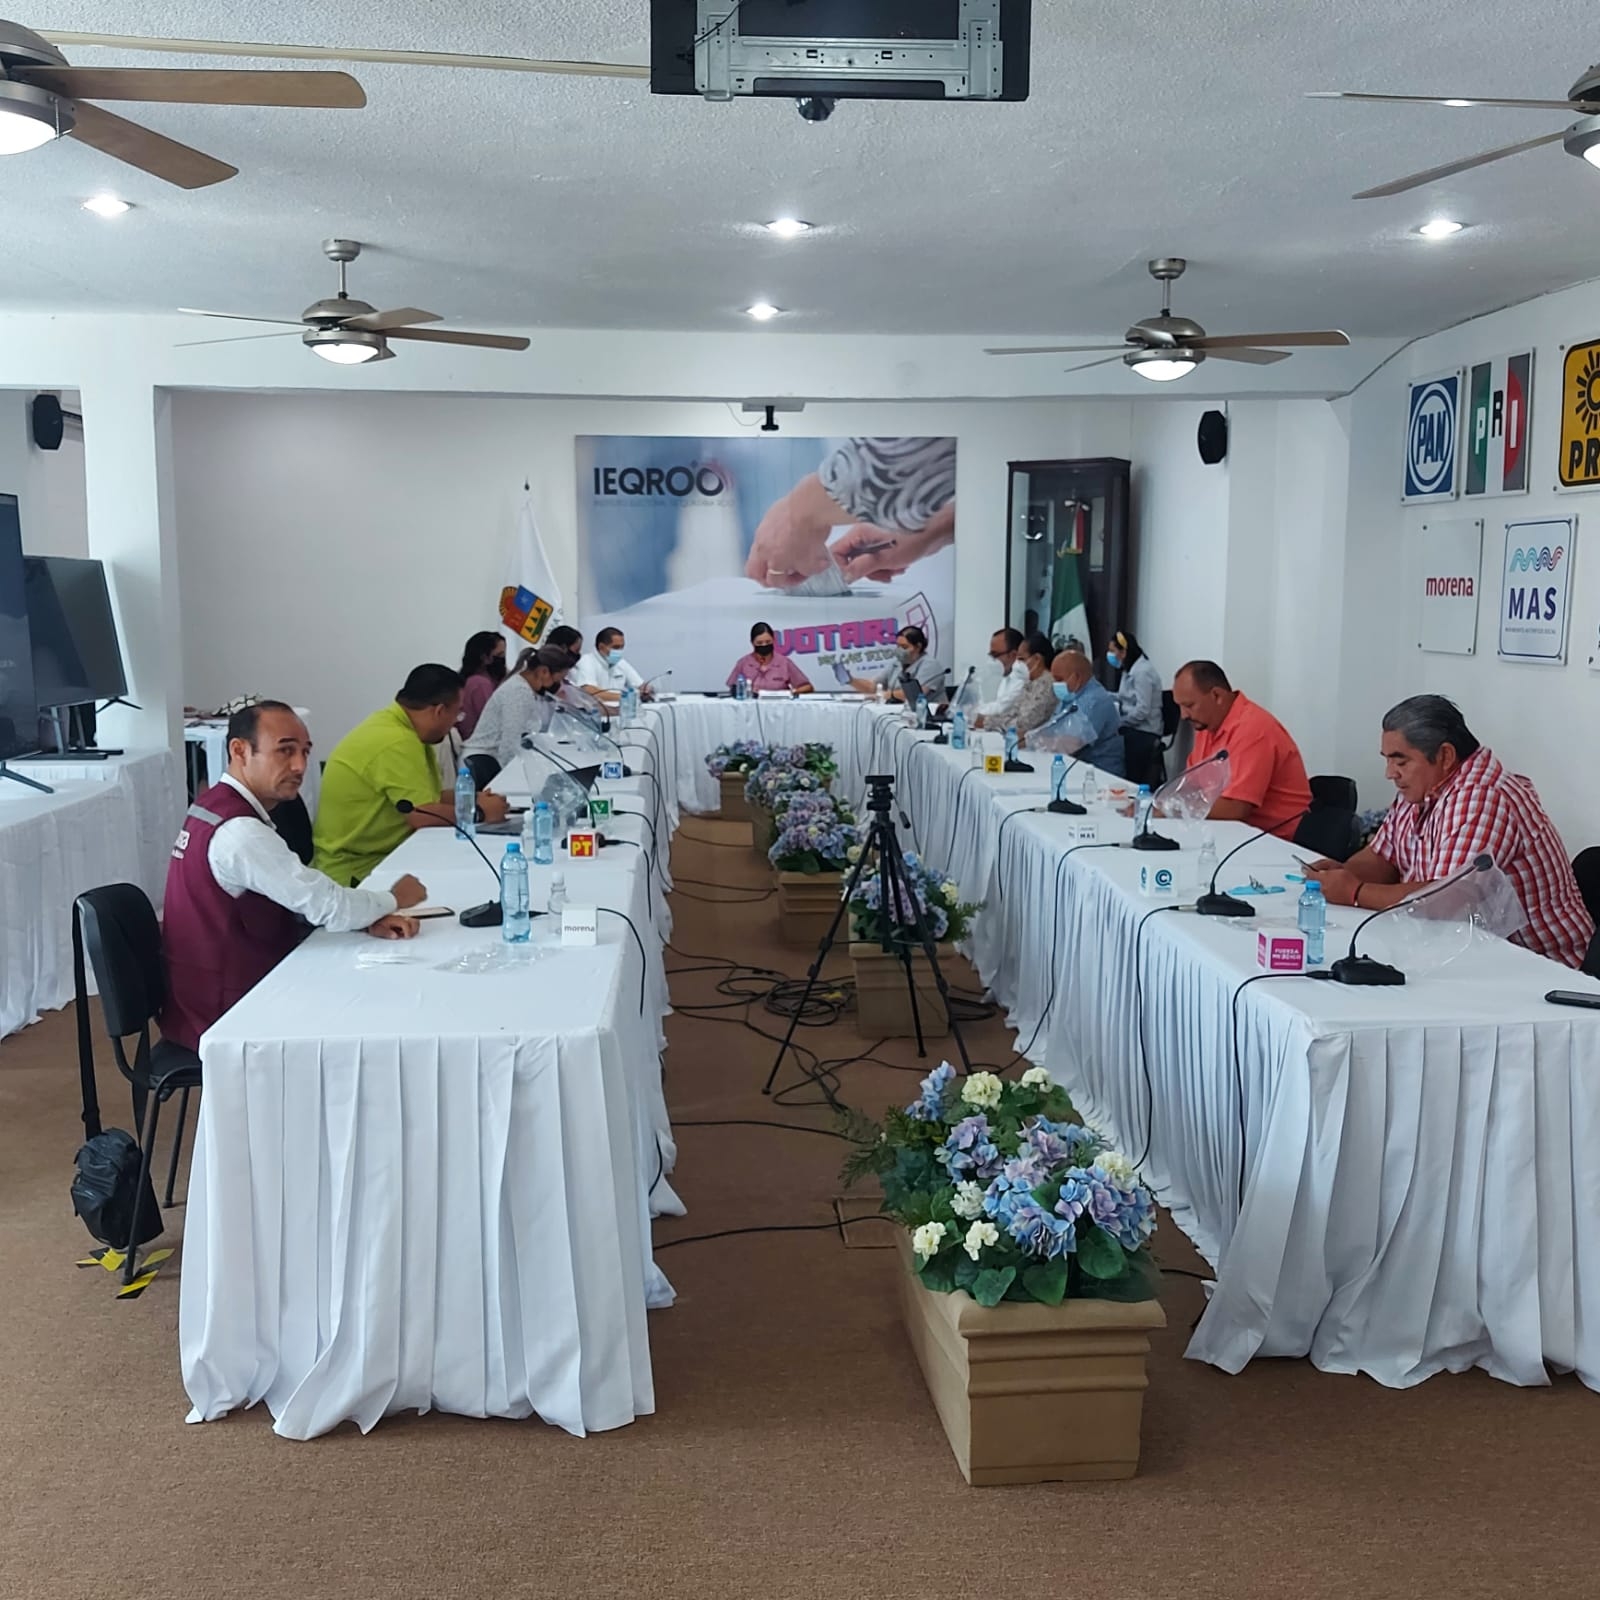 Baja participación en elecciones de Quintana Roo, motivo de análisis: Ieqroo